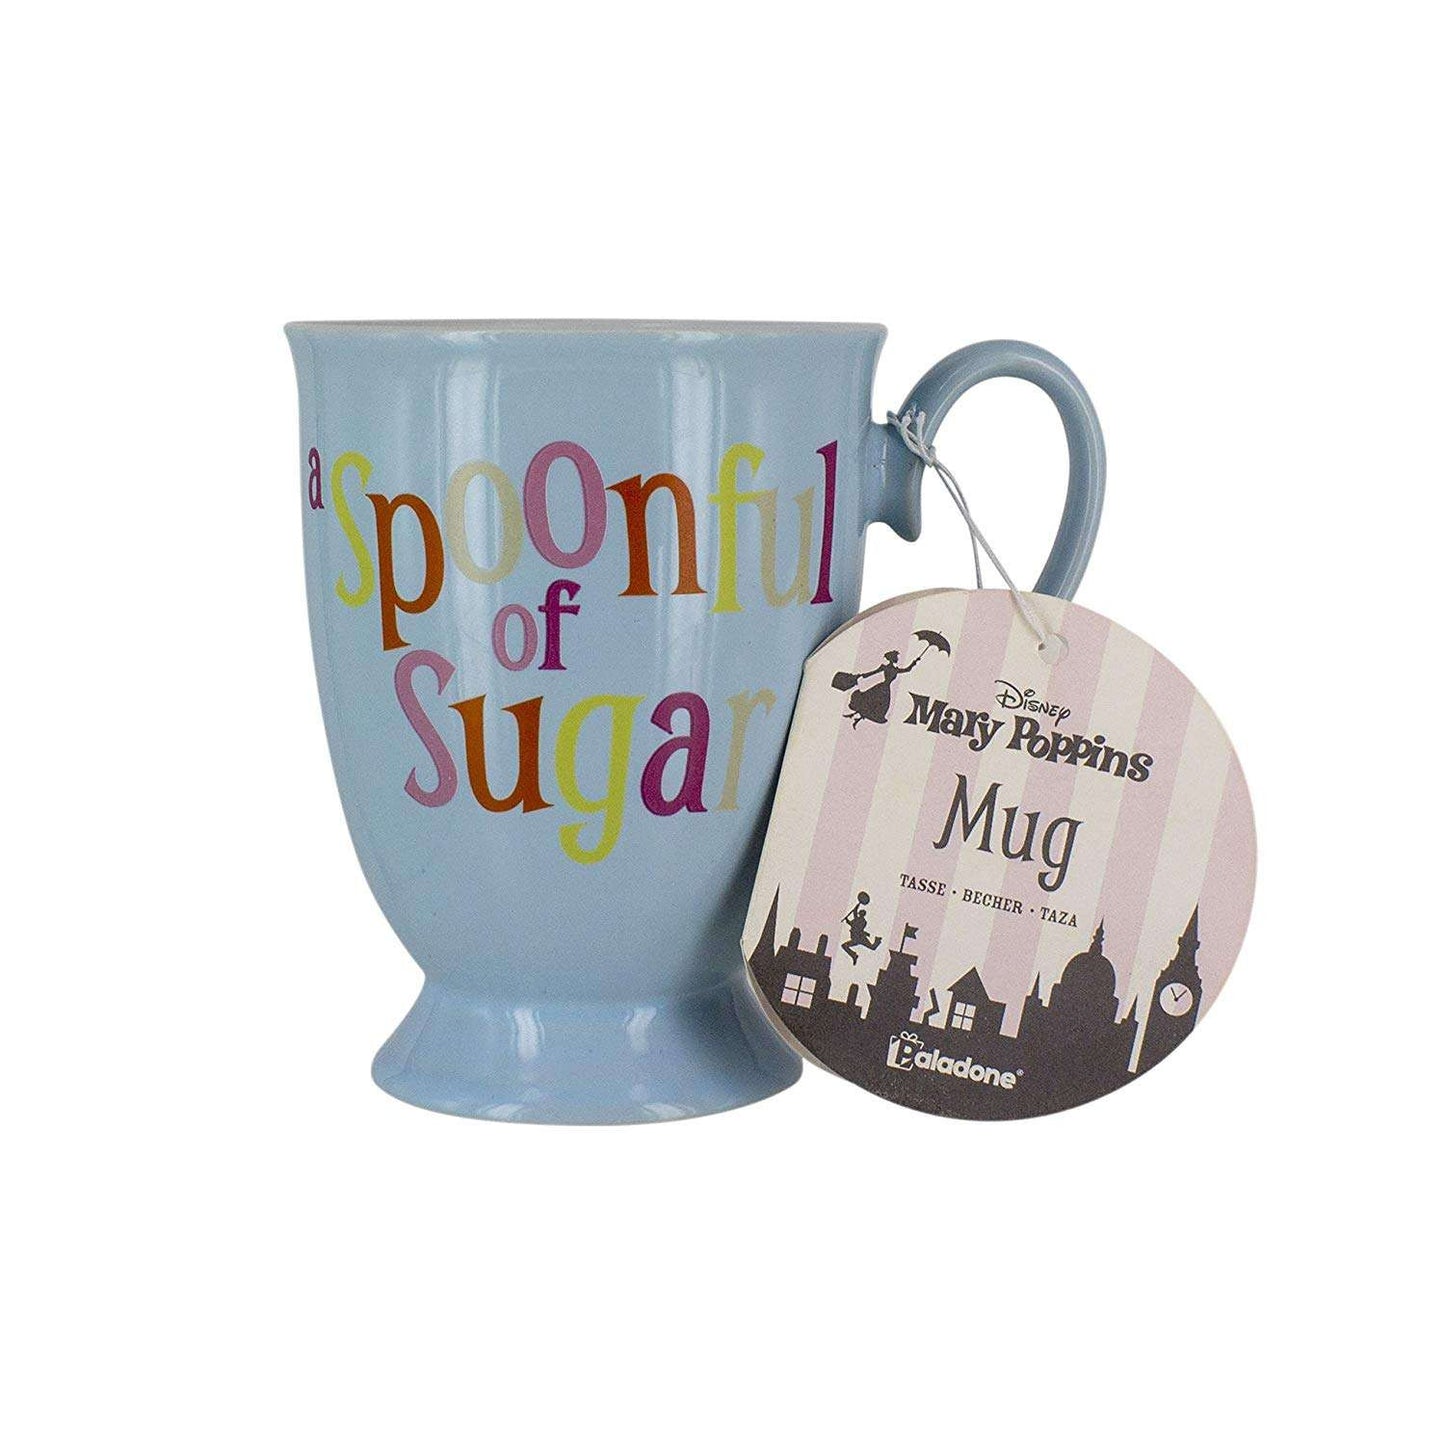 Mary Poppins Mug - Spoonful of Sugar